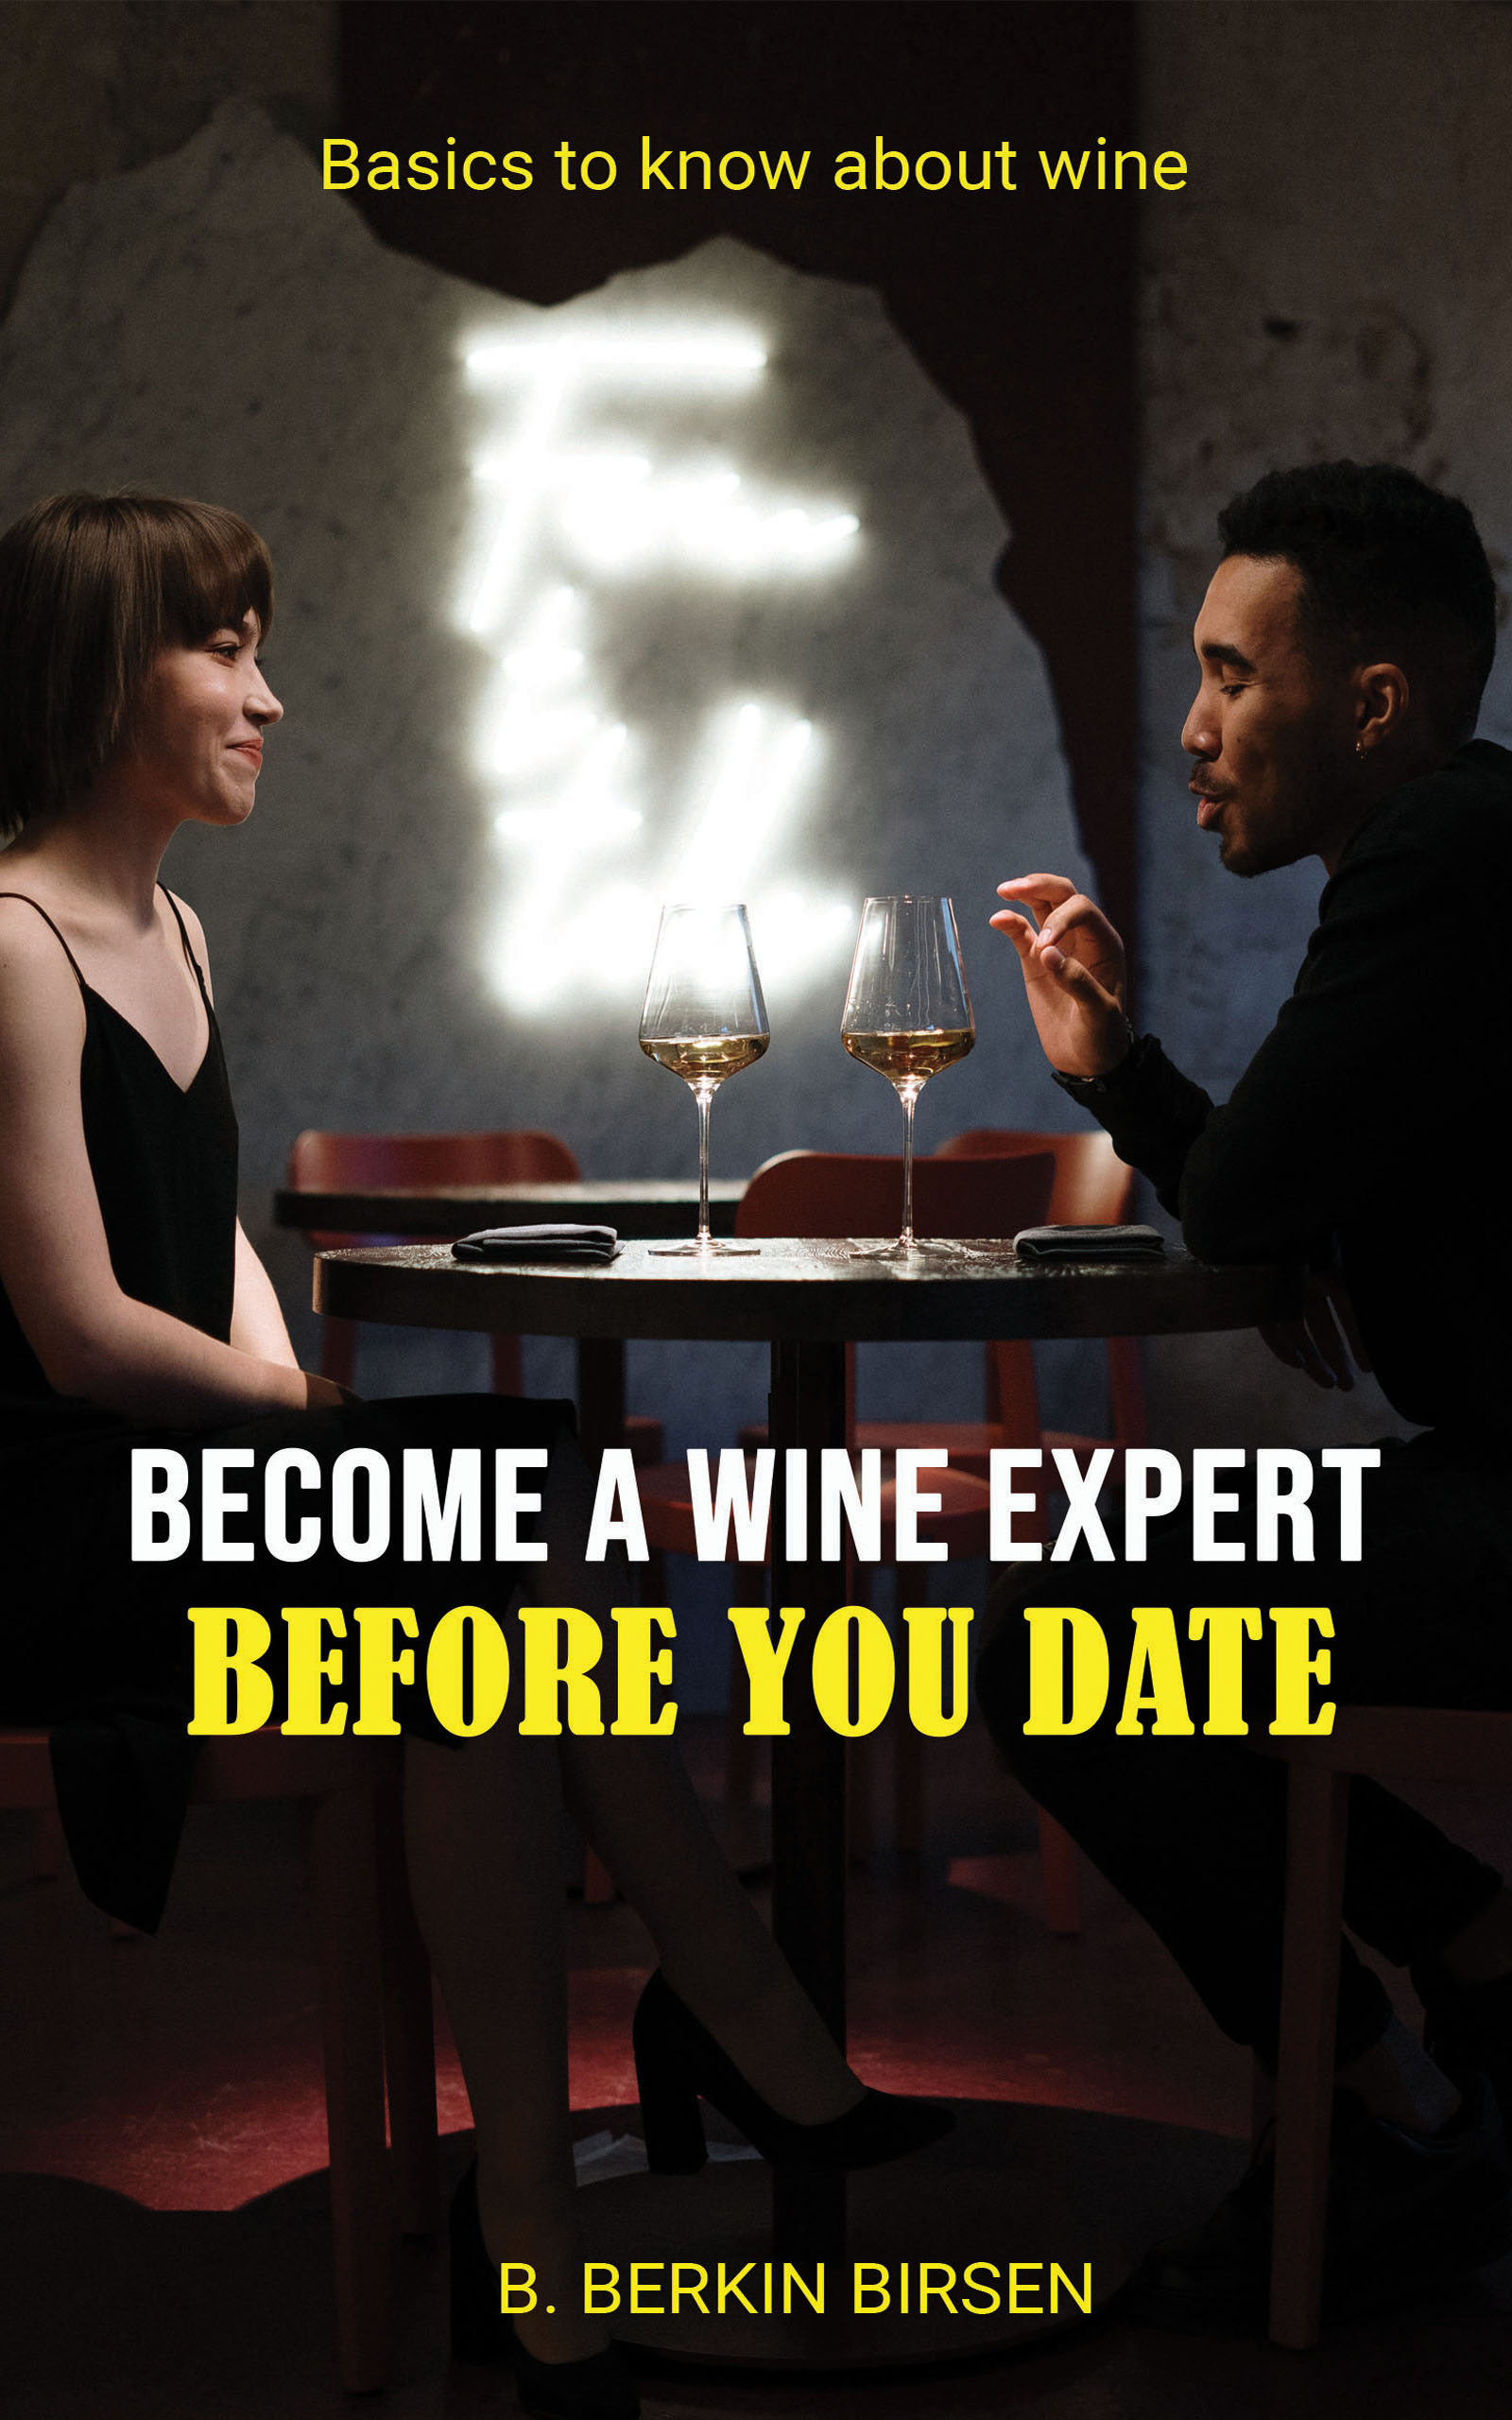 FREE: BECOME A WINE EXPERT BEFORE YOU DATE by Berkin Birsen